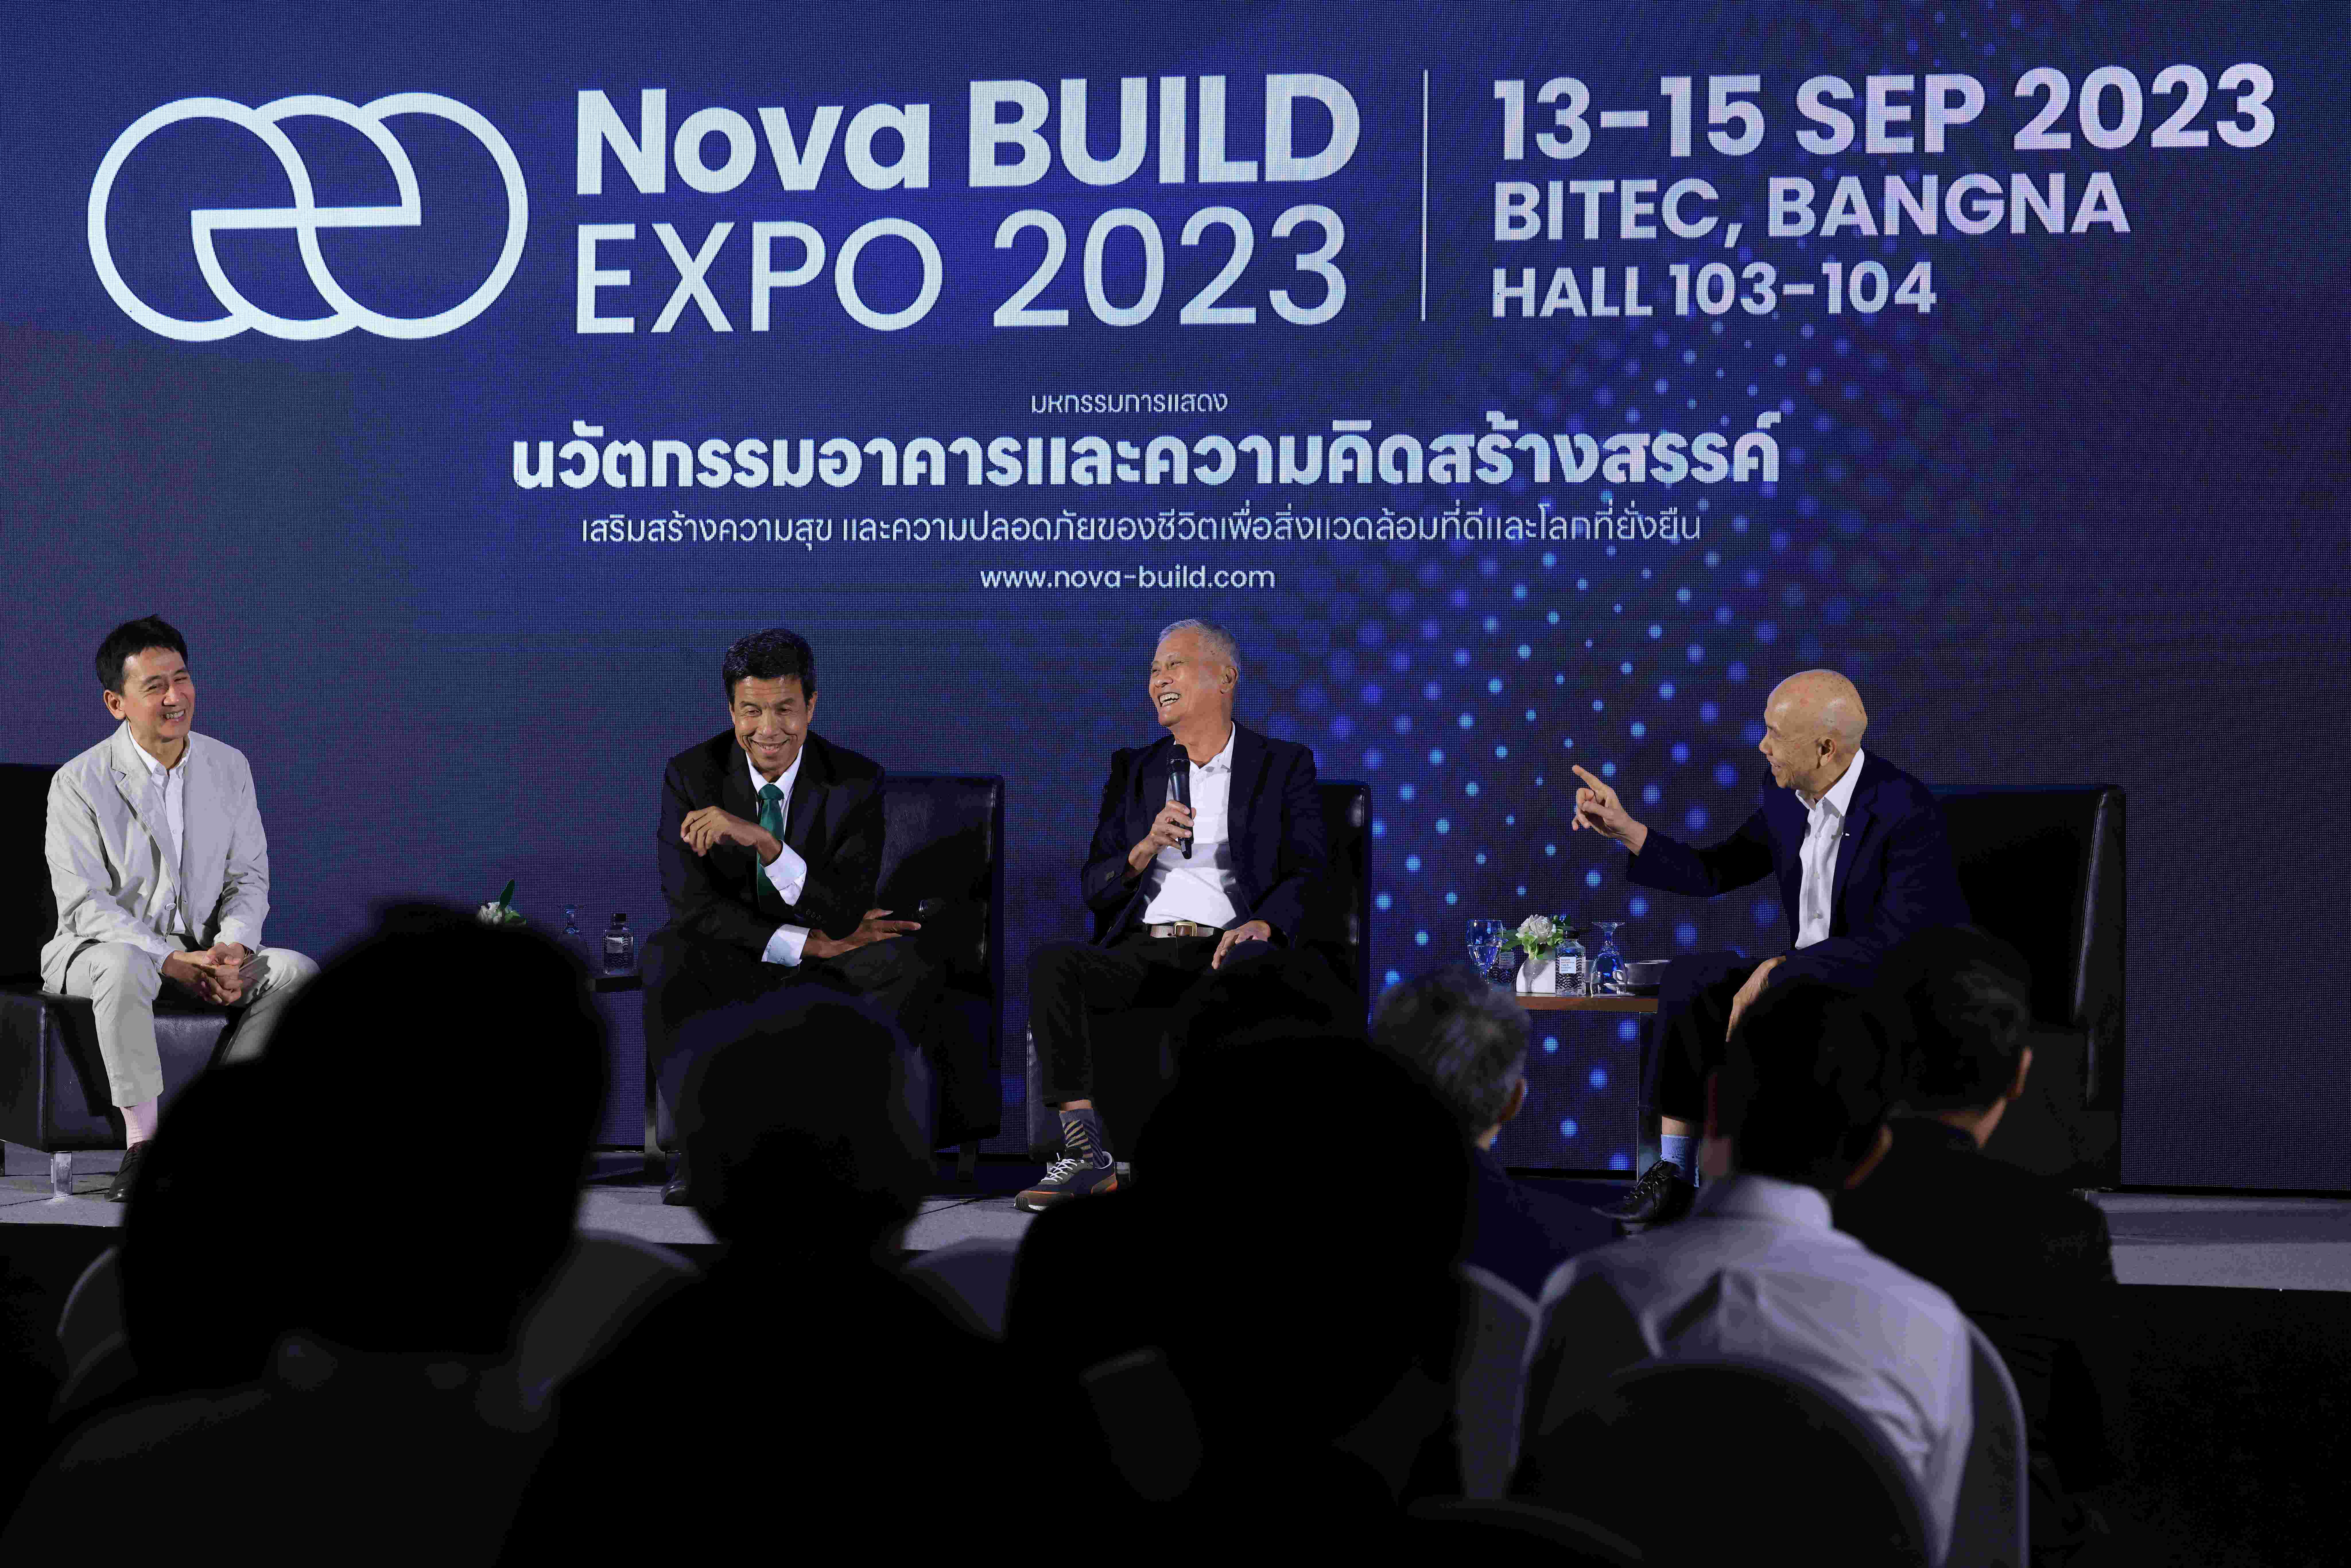 Nova BUILD EXPO 2023 